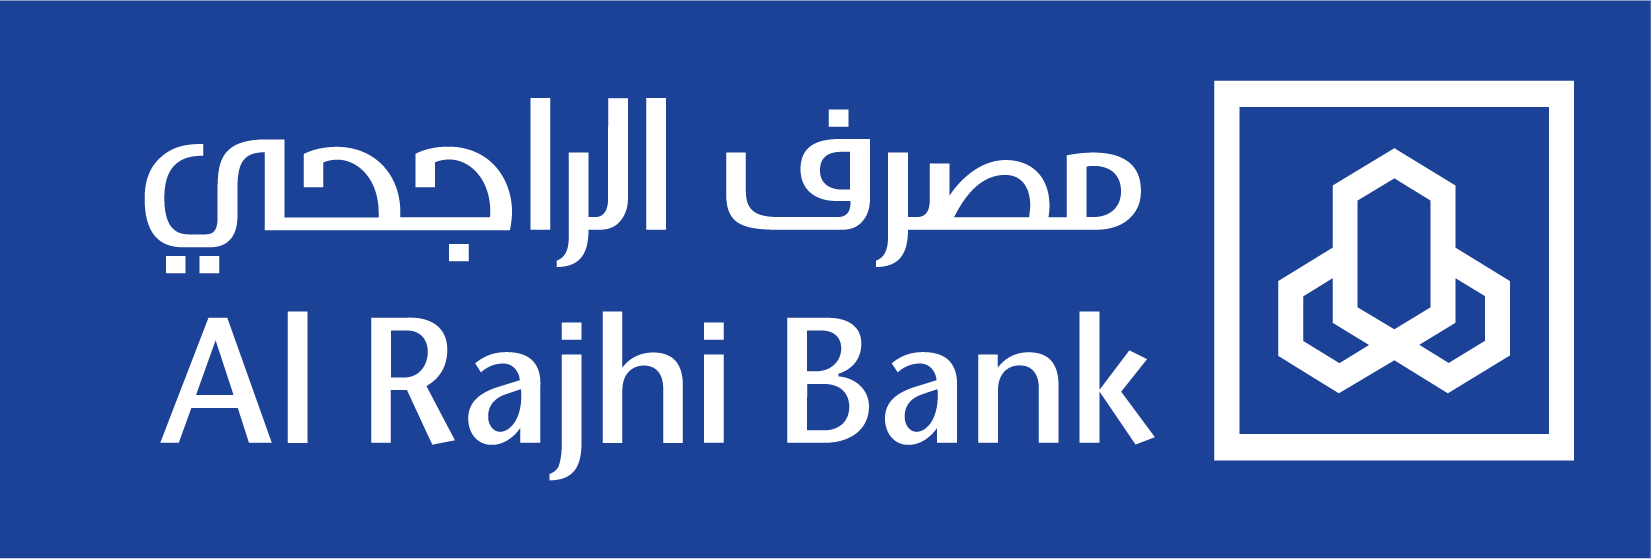 Al Rajhi Bank Logo png